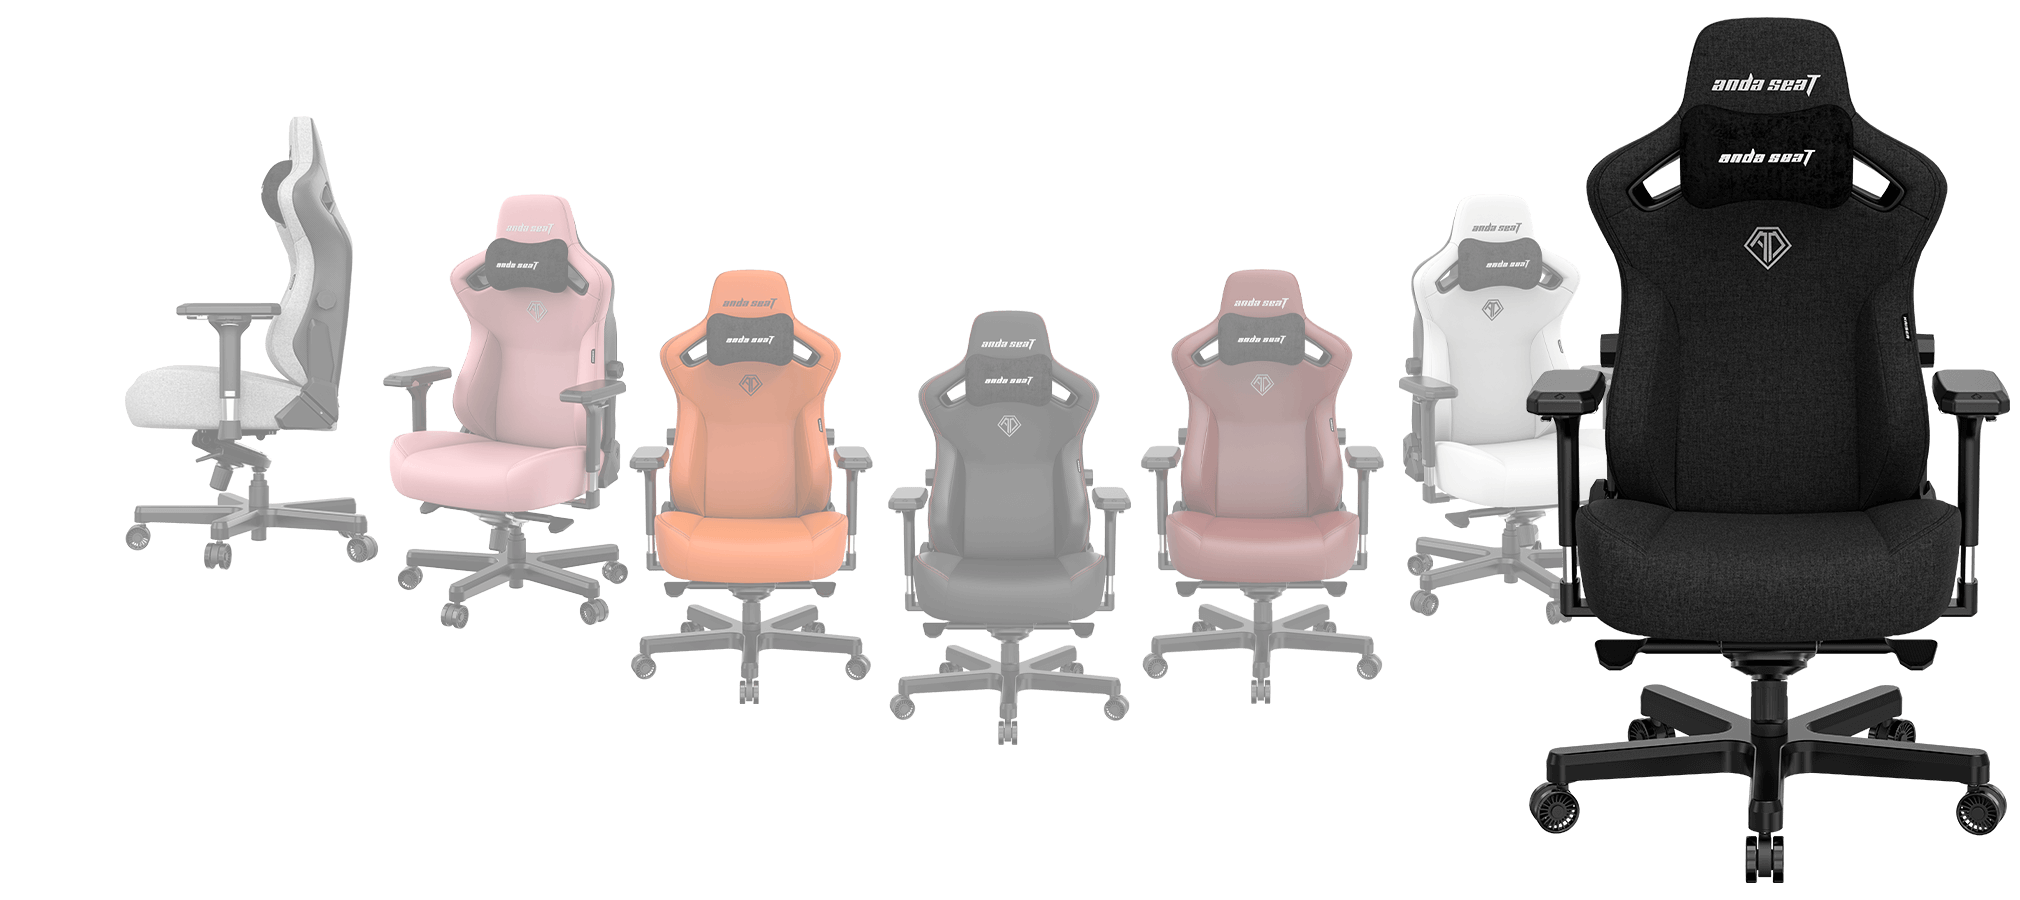 Anda Seat - Ergonomic Gaming Style Office Chair – AndaSeatCanada